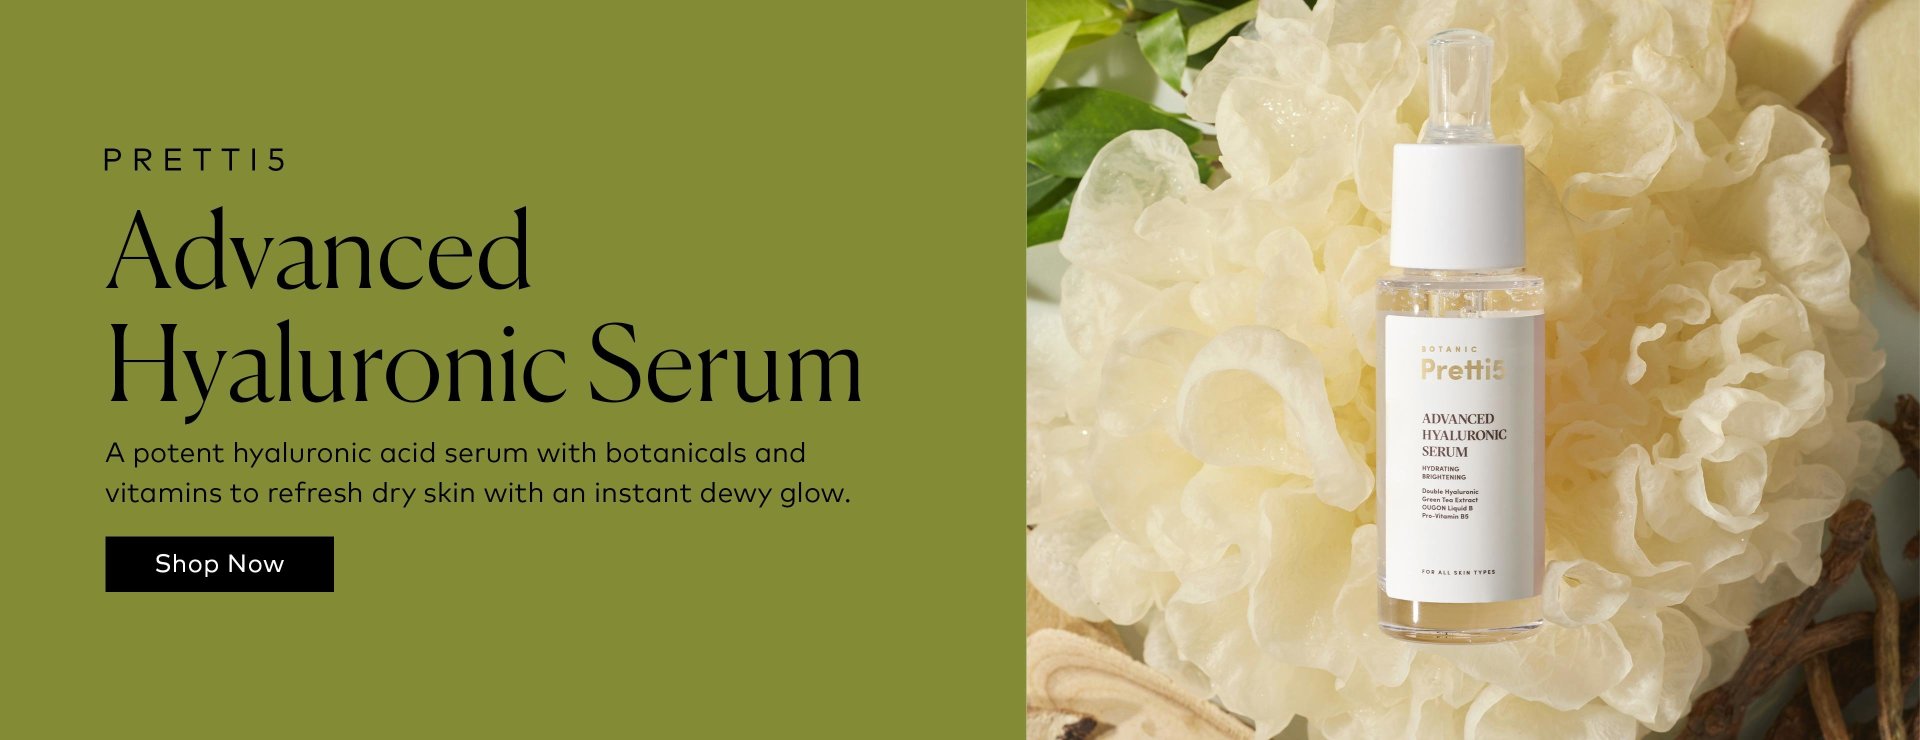 Shop the Pretti5 Advanced Hyaluronic Serum on Beautylish.com! 